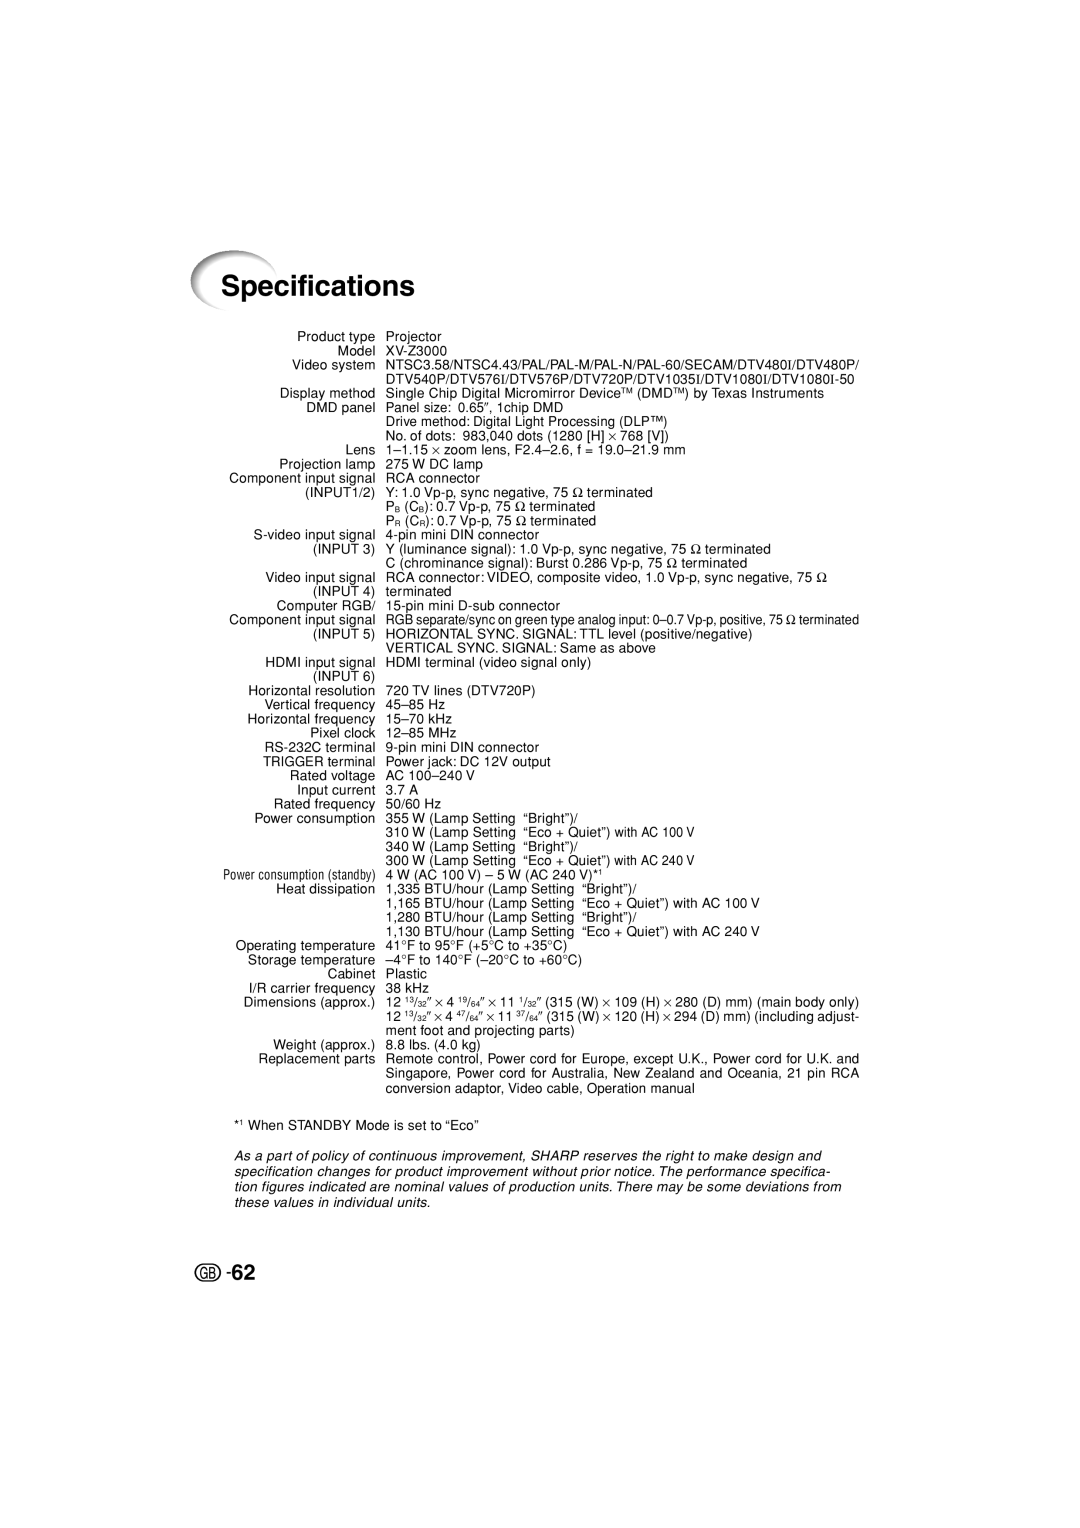 Sharp XV-Z3000U operation manual Specifications 